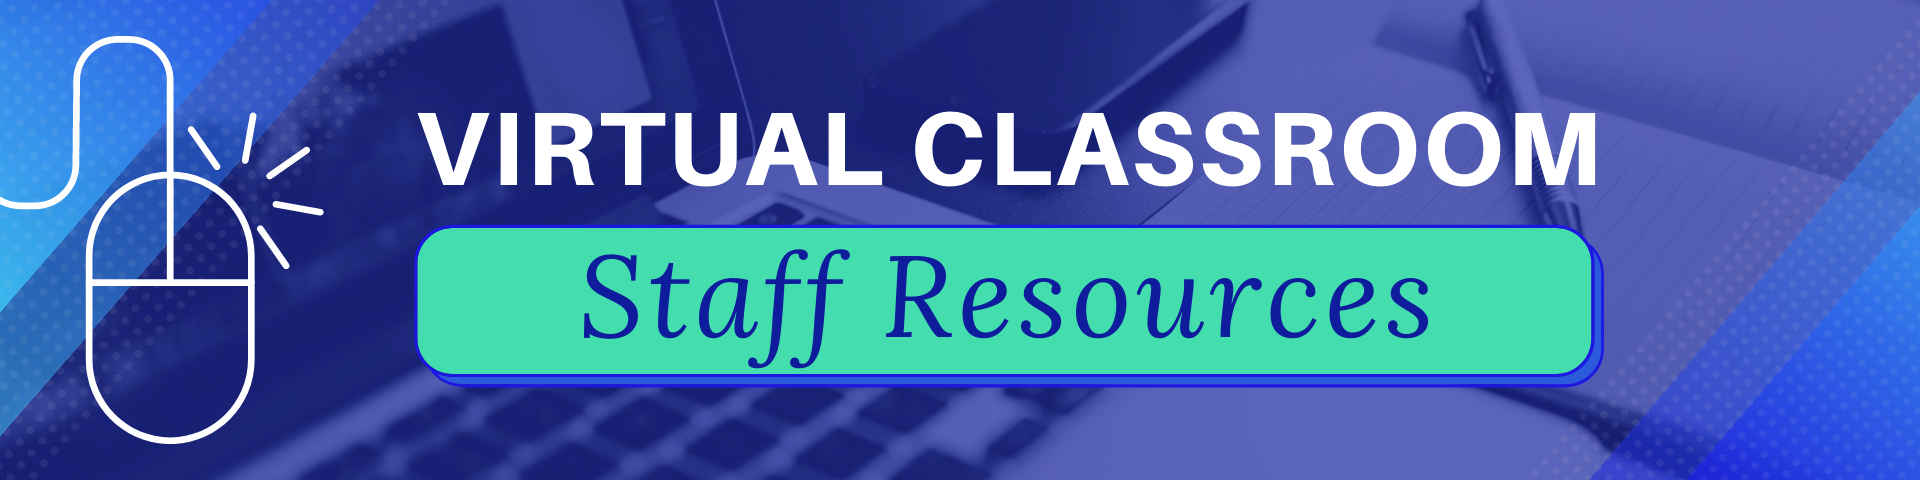 Virtual Classroom Staff Resources